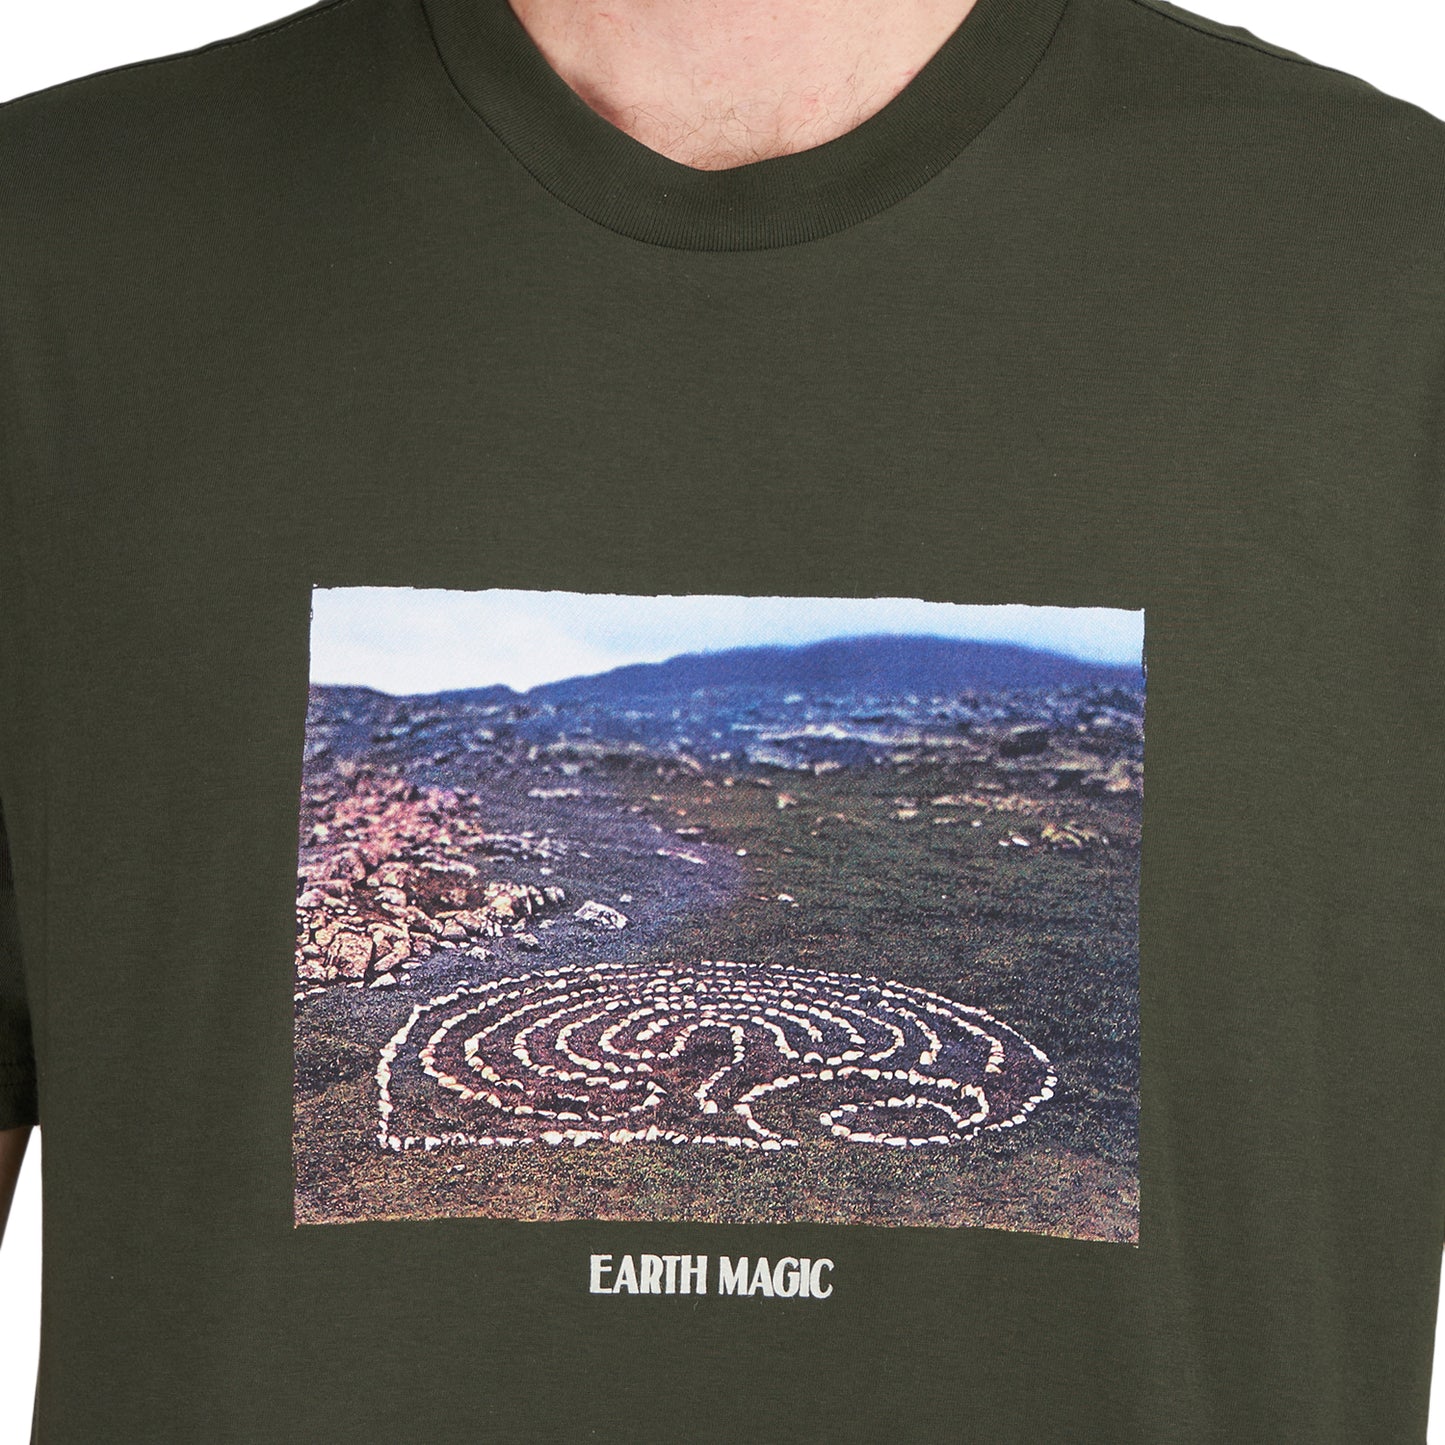 Carhartt WIP S/S Earth Magic T-Shirt (Oliv)  - Cheap Juzsports Jordan Outlet